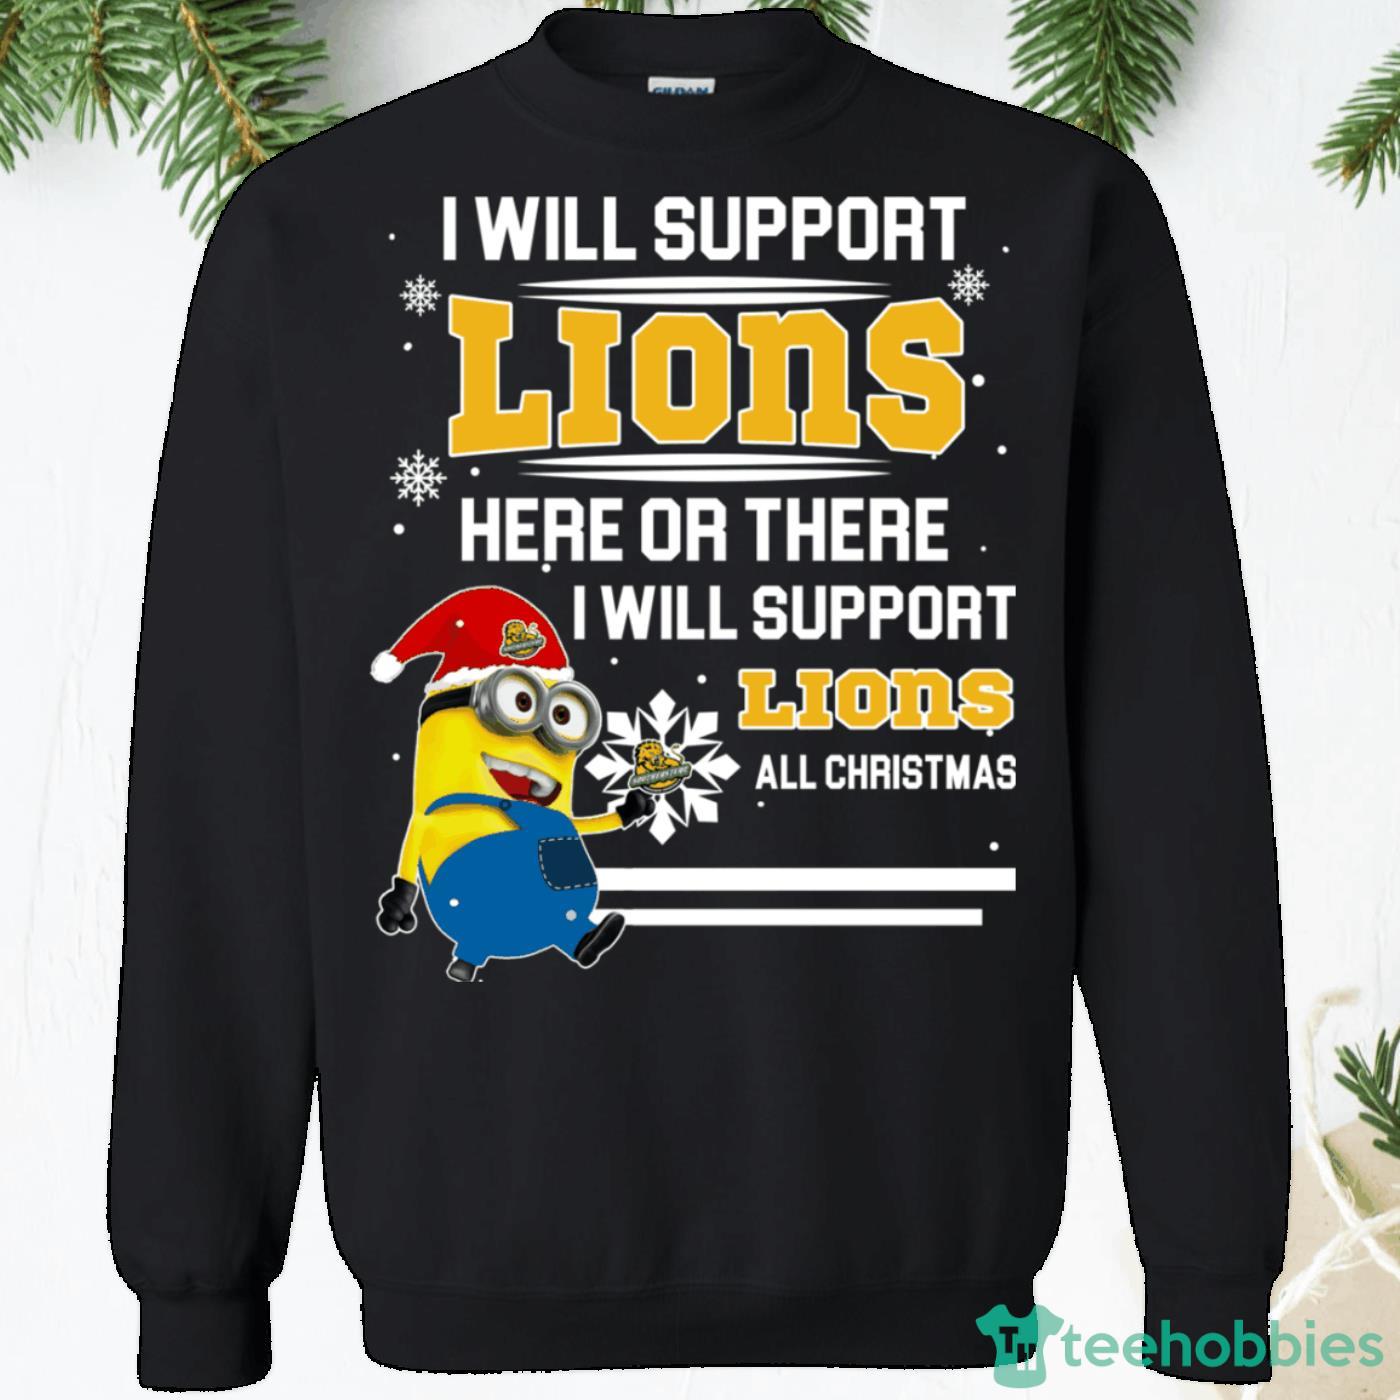 Lions Minion Christmas Sweatshirt Product Photo 1